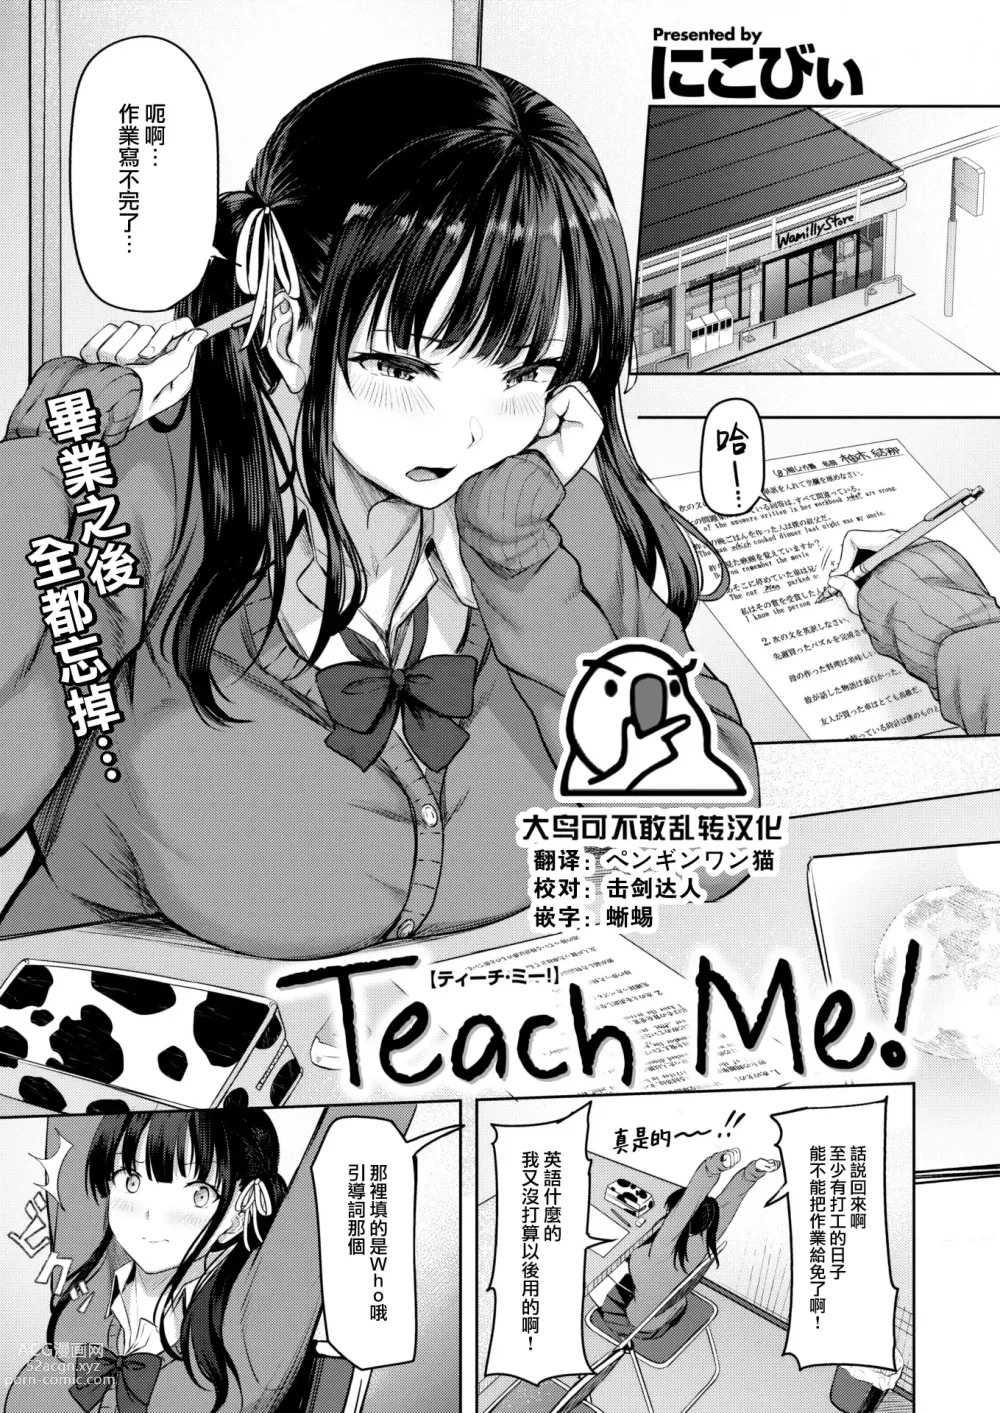 Page 1 of manga Teach me!